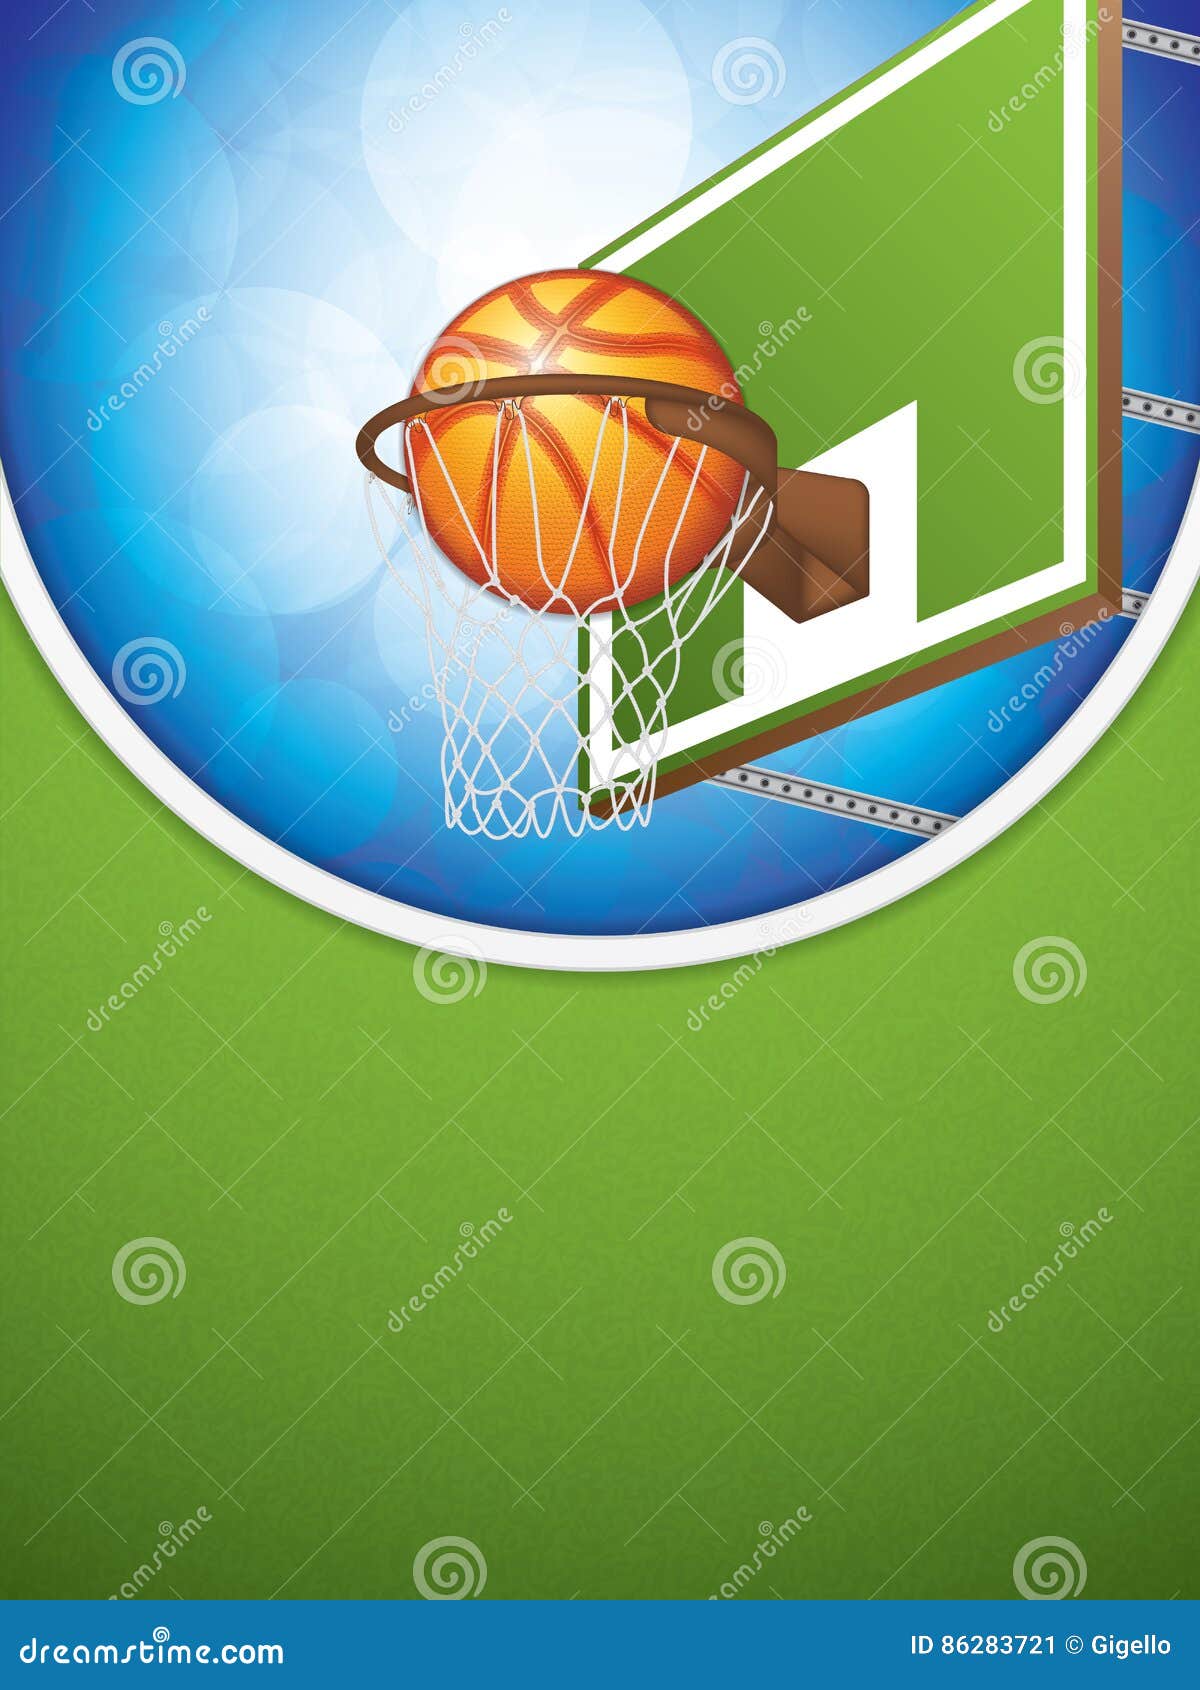 Буклет баскетбол. Баскетбольный буклет. Фон для буклетов баскетбол. Брошюра баскетбол. Баскетбол картинки для буклета.